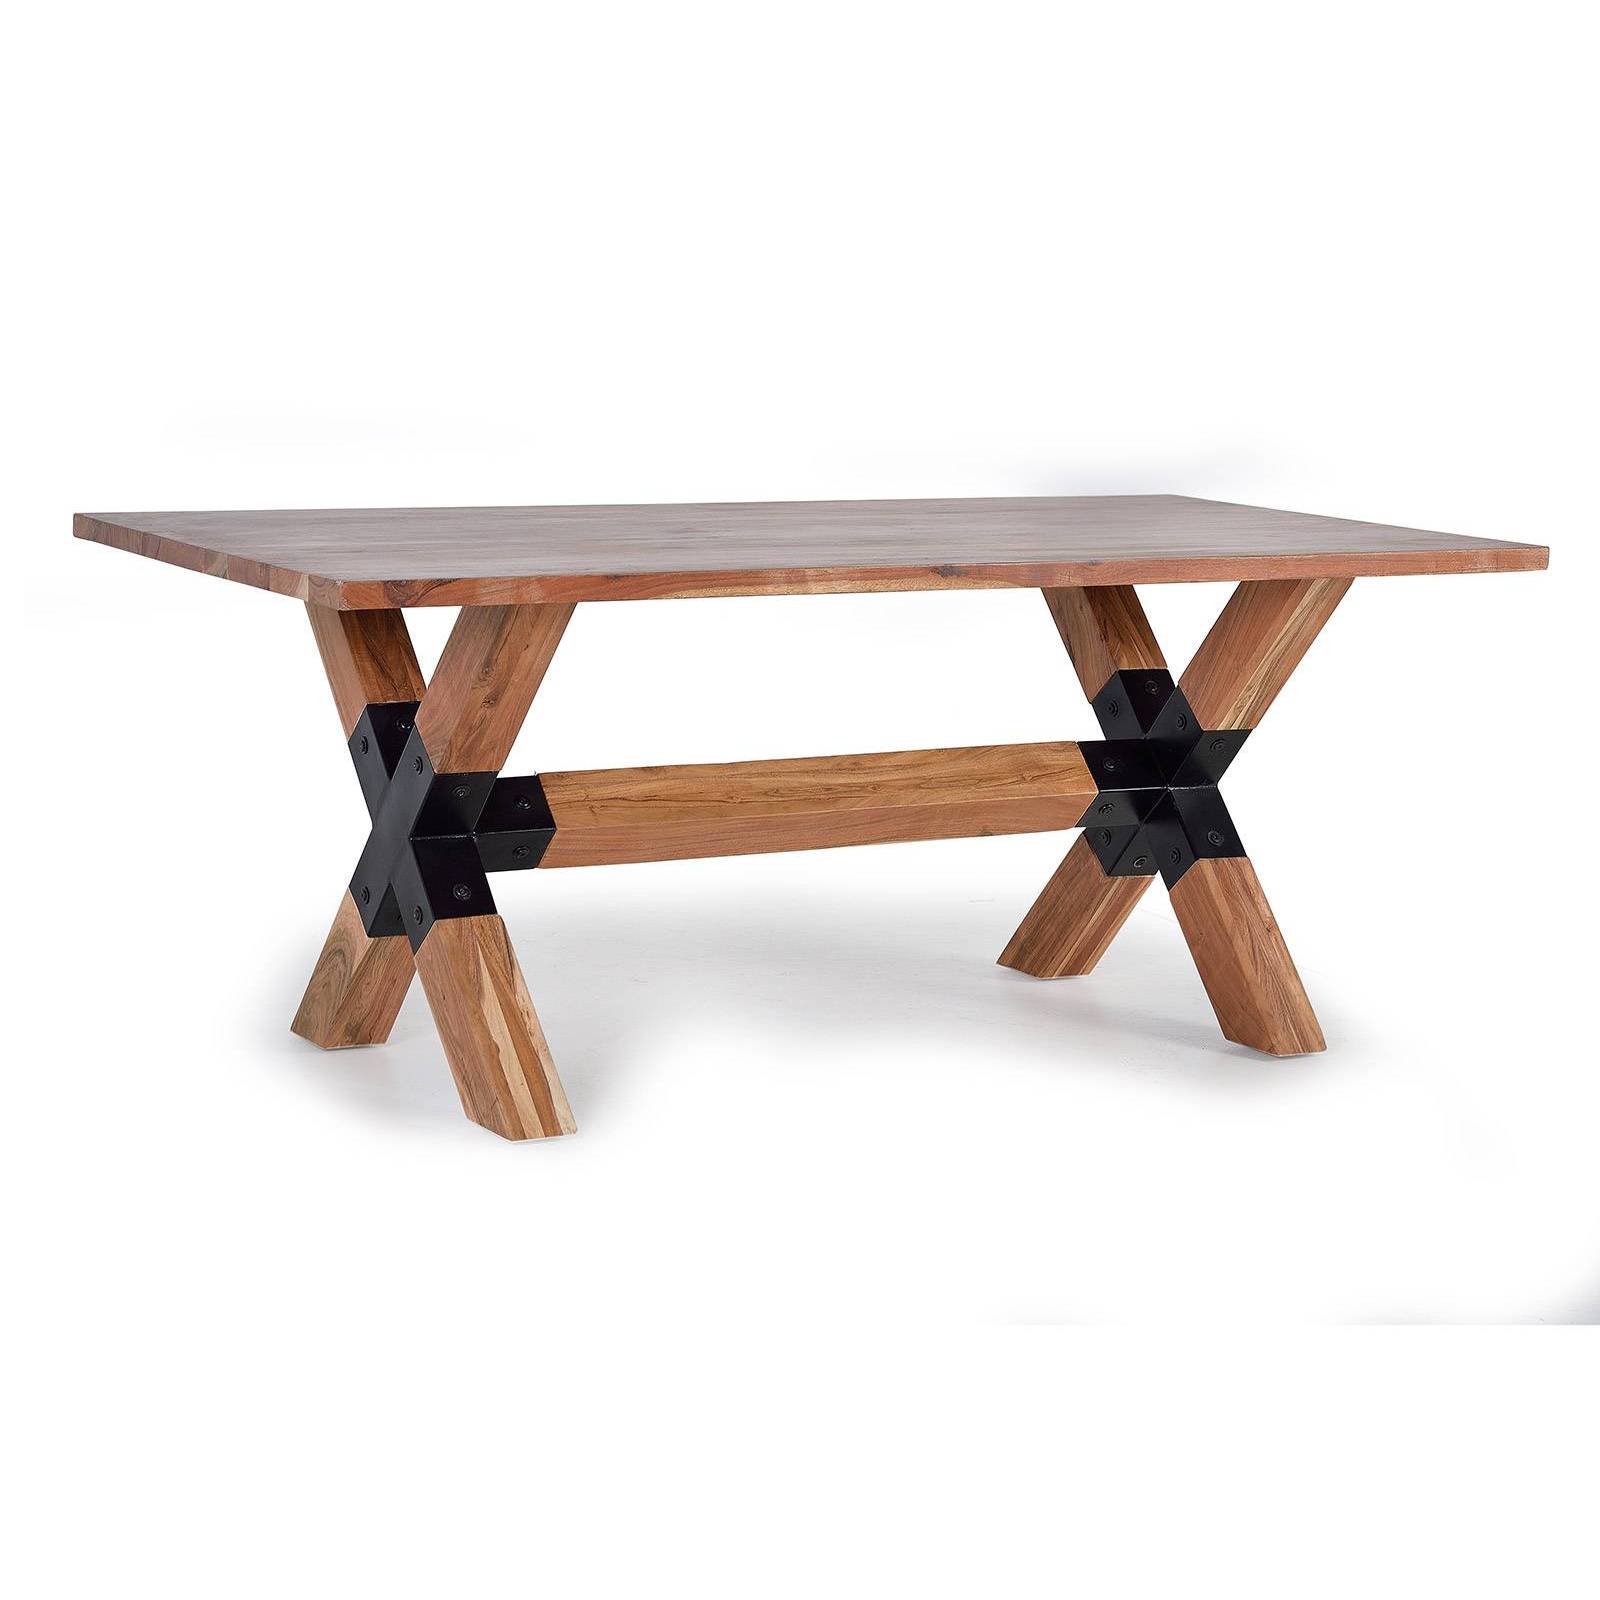 Table bois rectangulaire